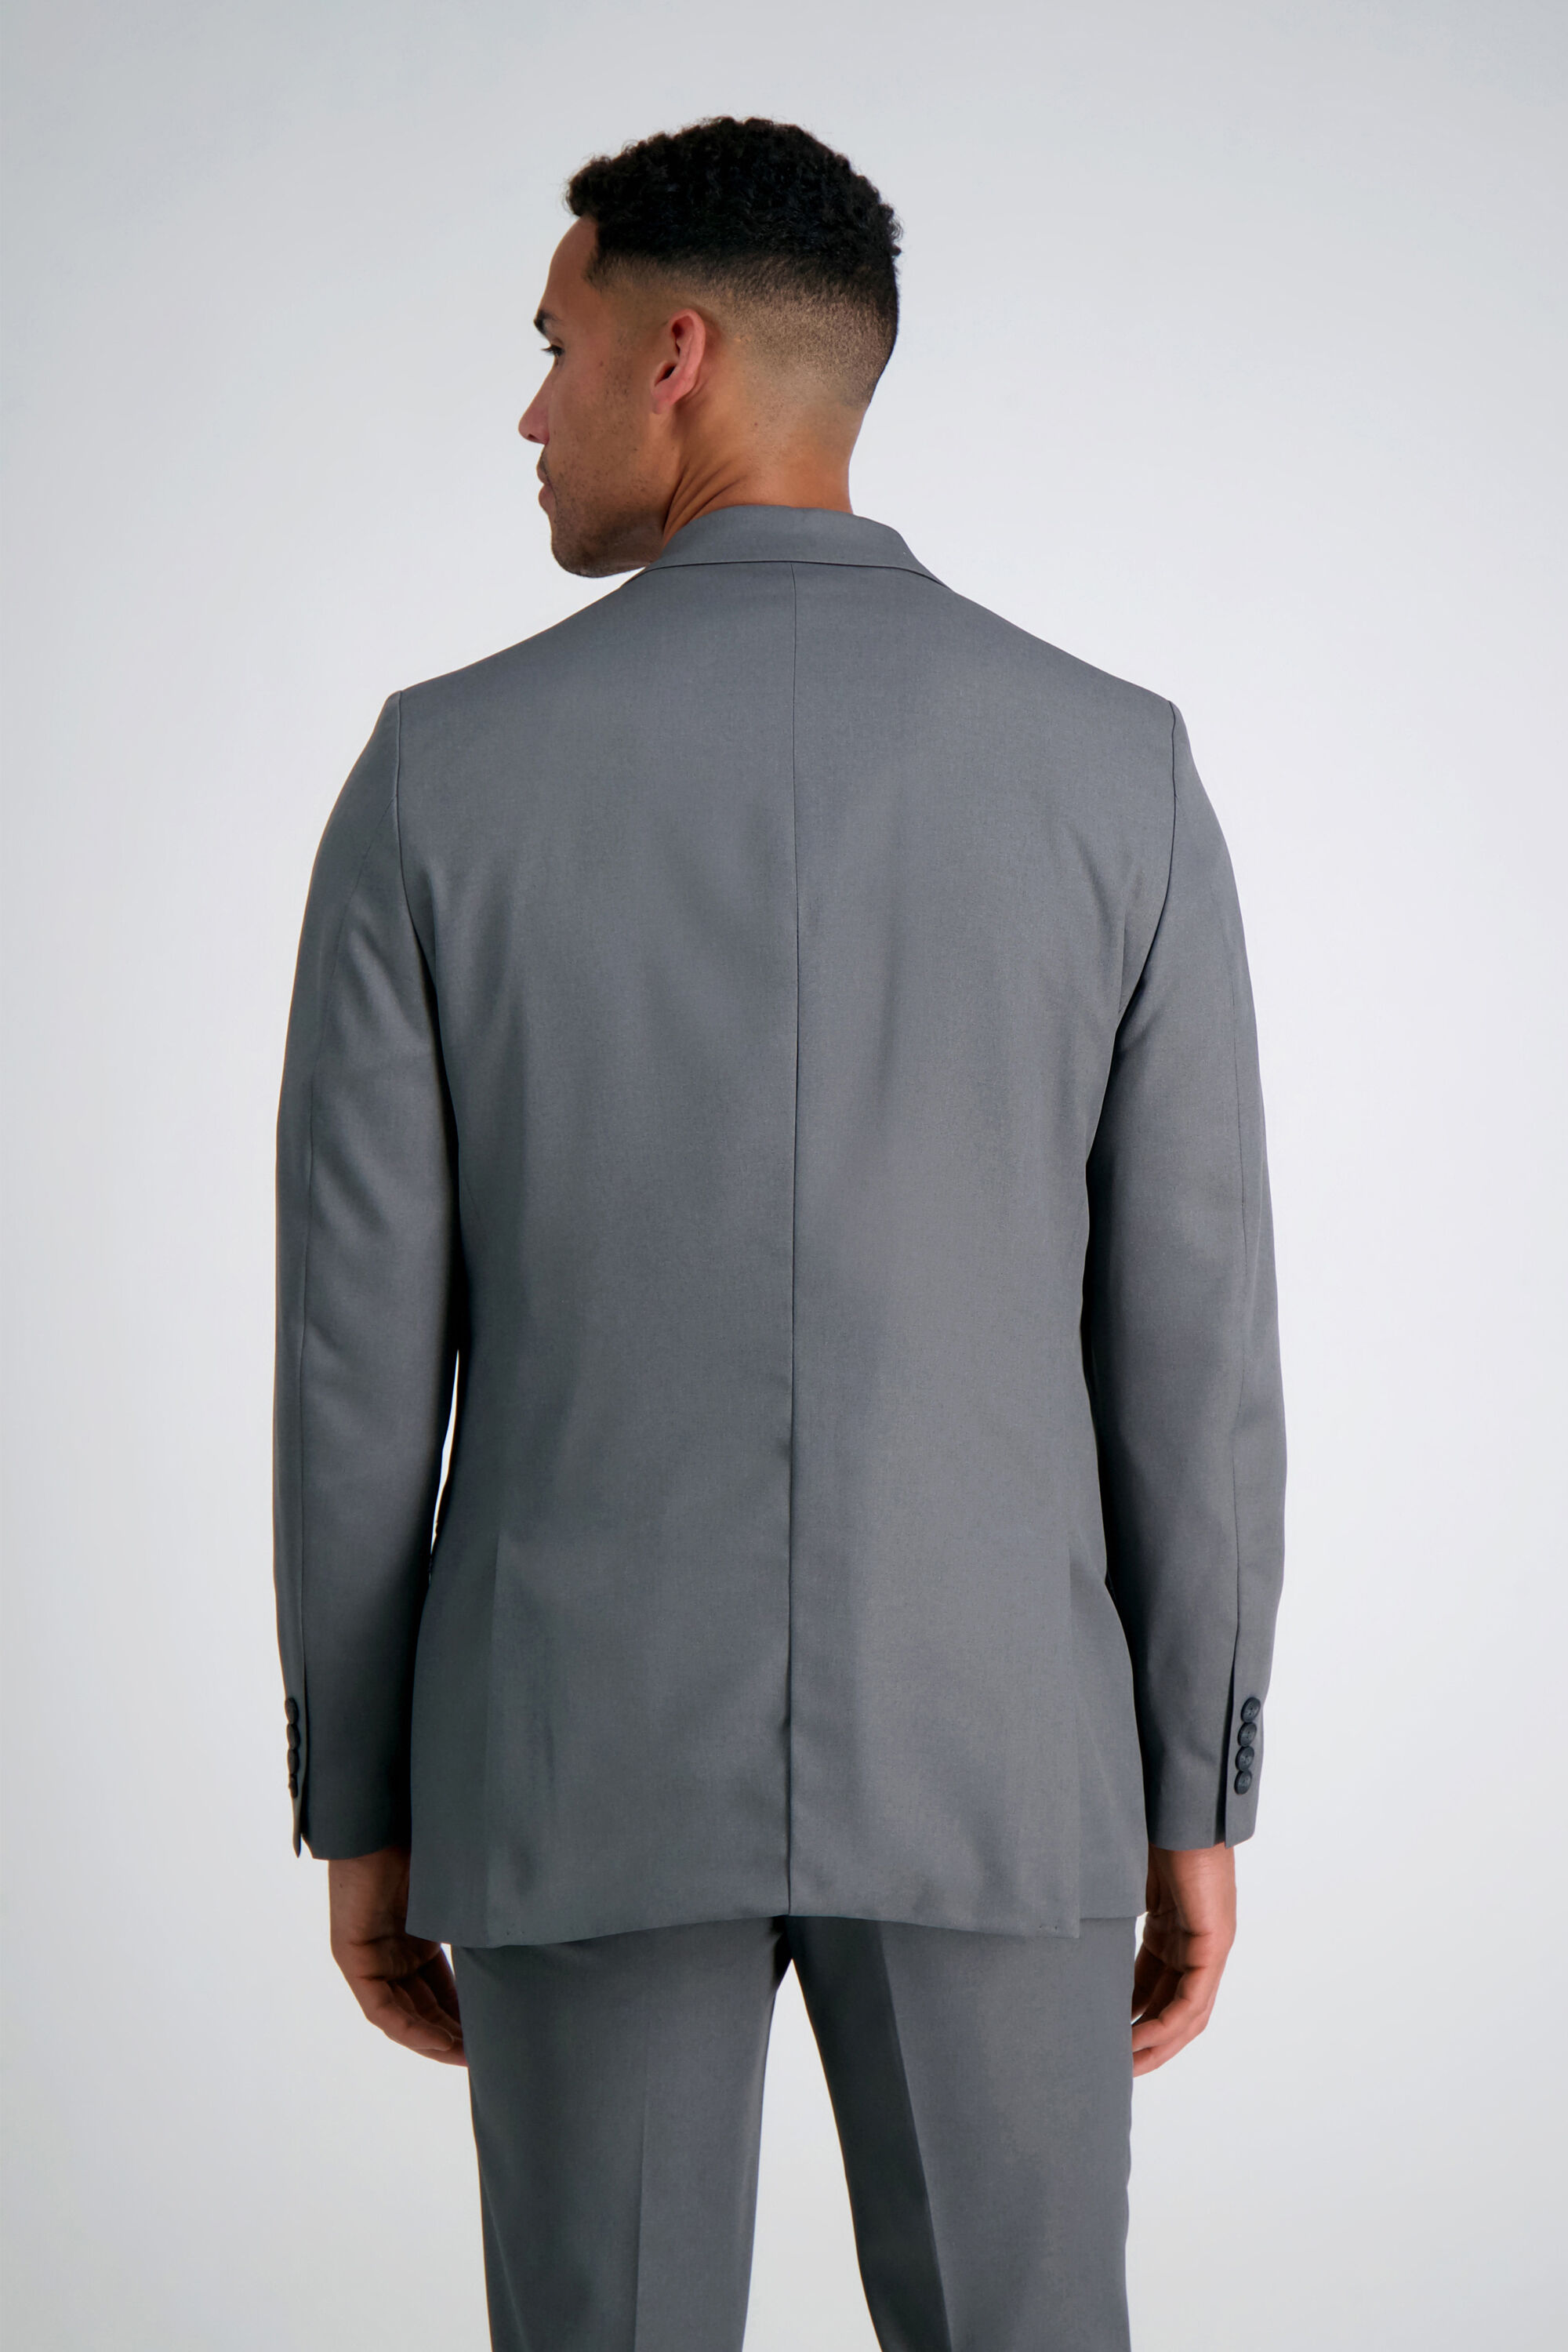 The Active Series™ Heather Suit Jacket